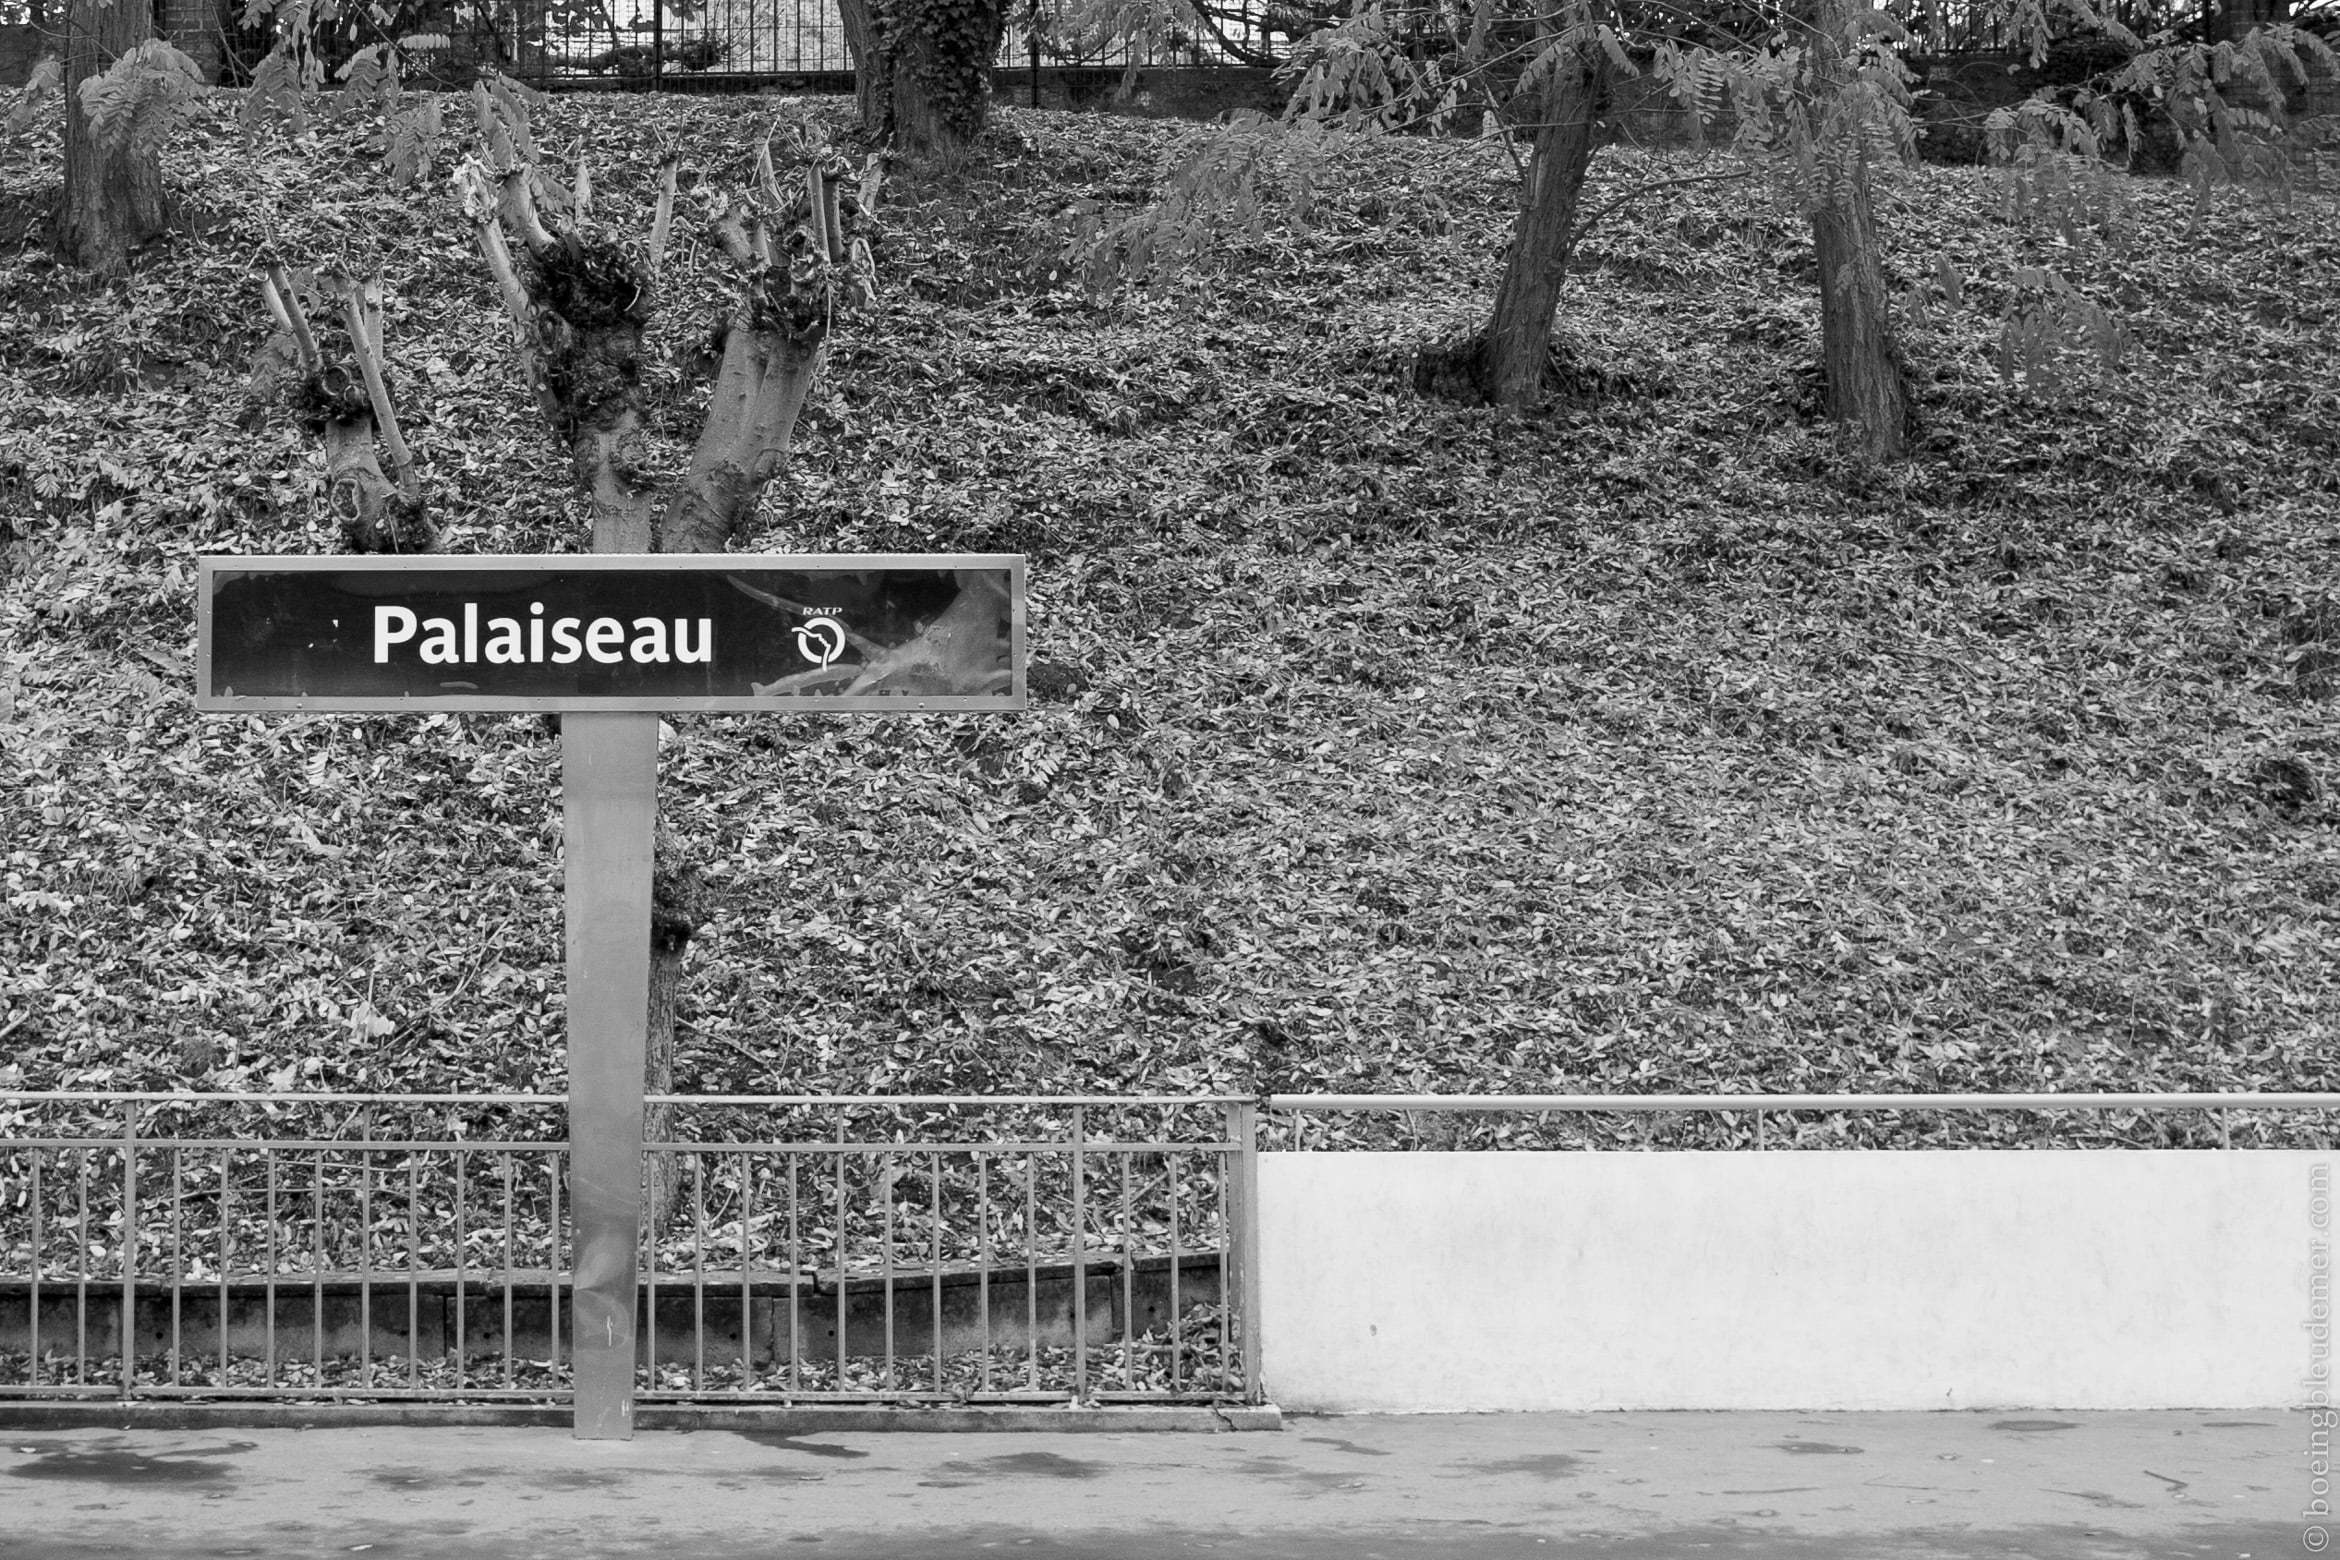 I want to go to Palaiseau